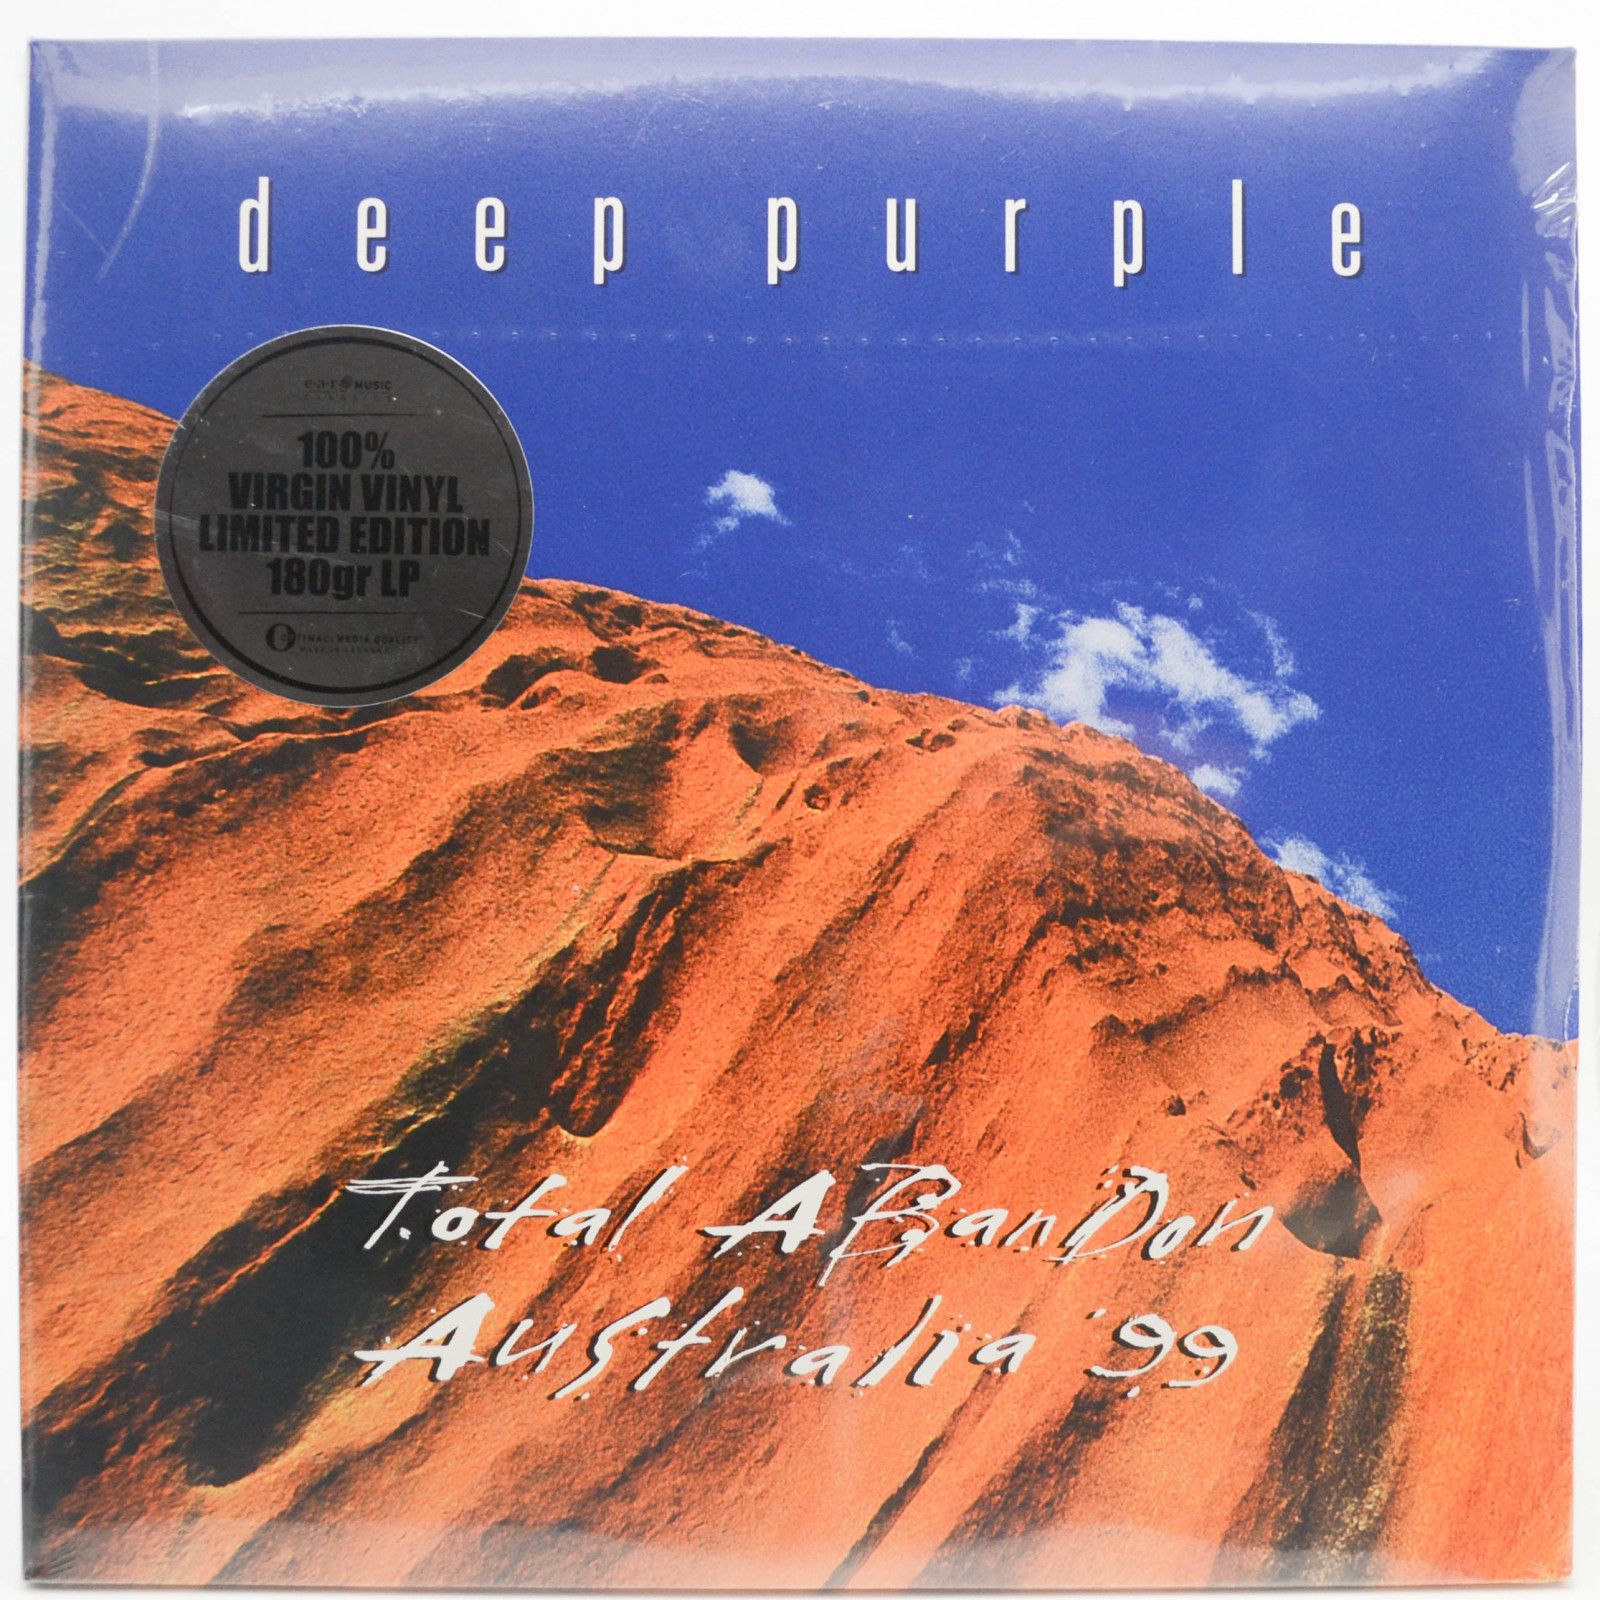 Deep Purple — Total Abandon - Australia '99 (2LP), 1999